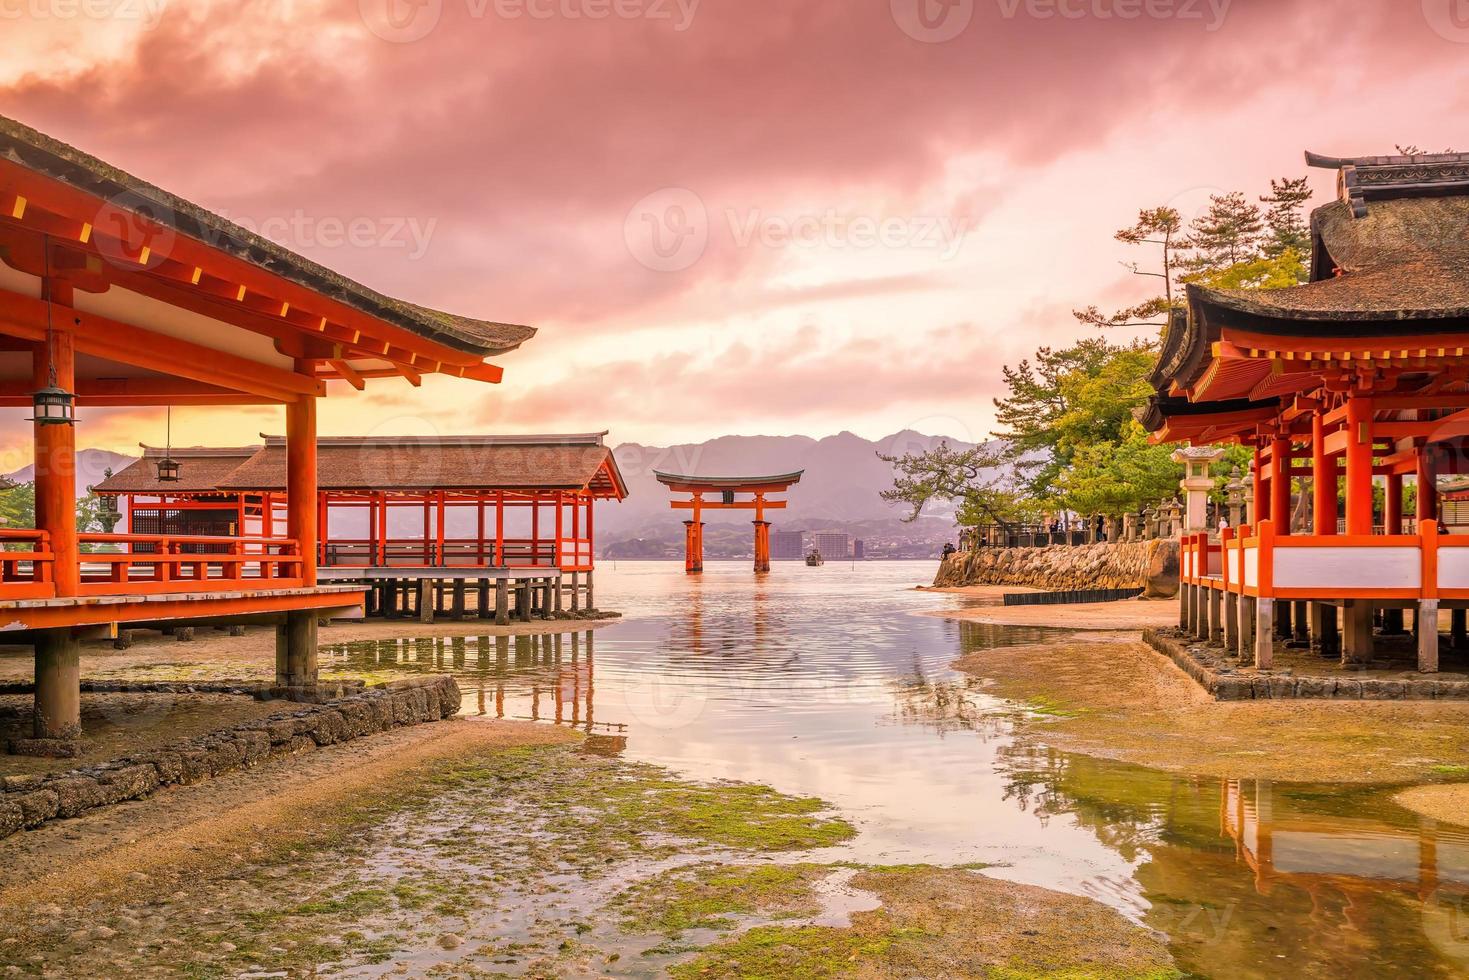 ilha miyajima, o famoso portão torii flutuante foto